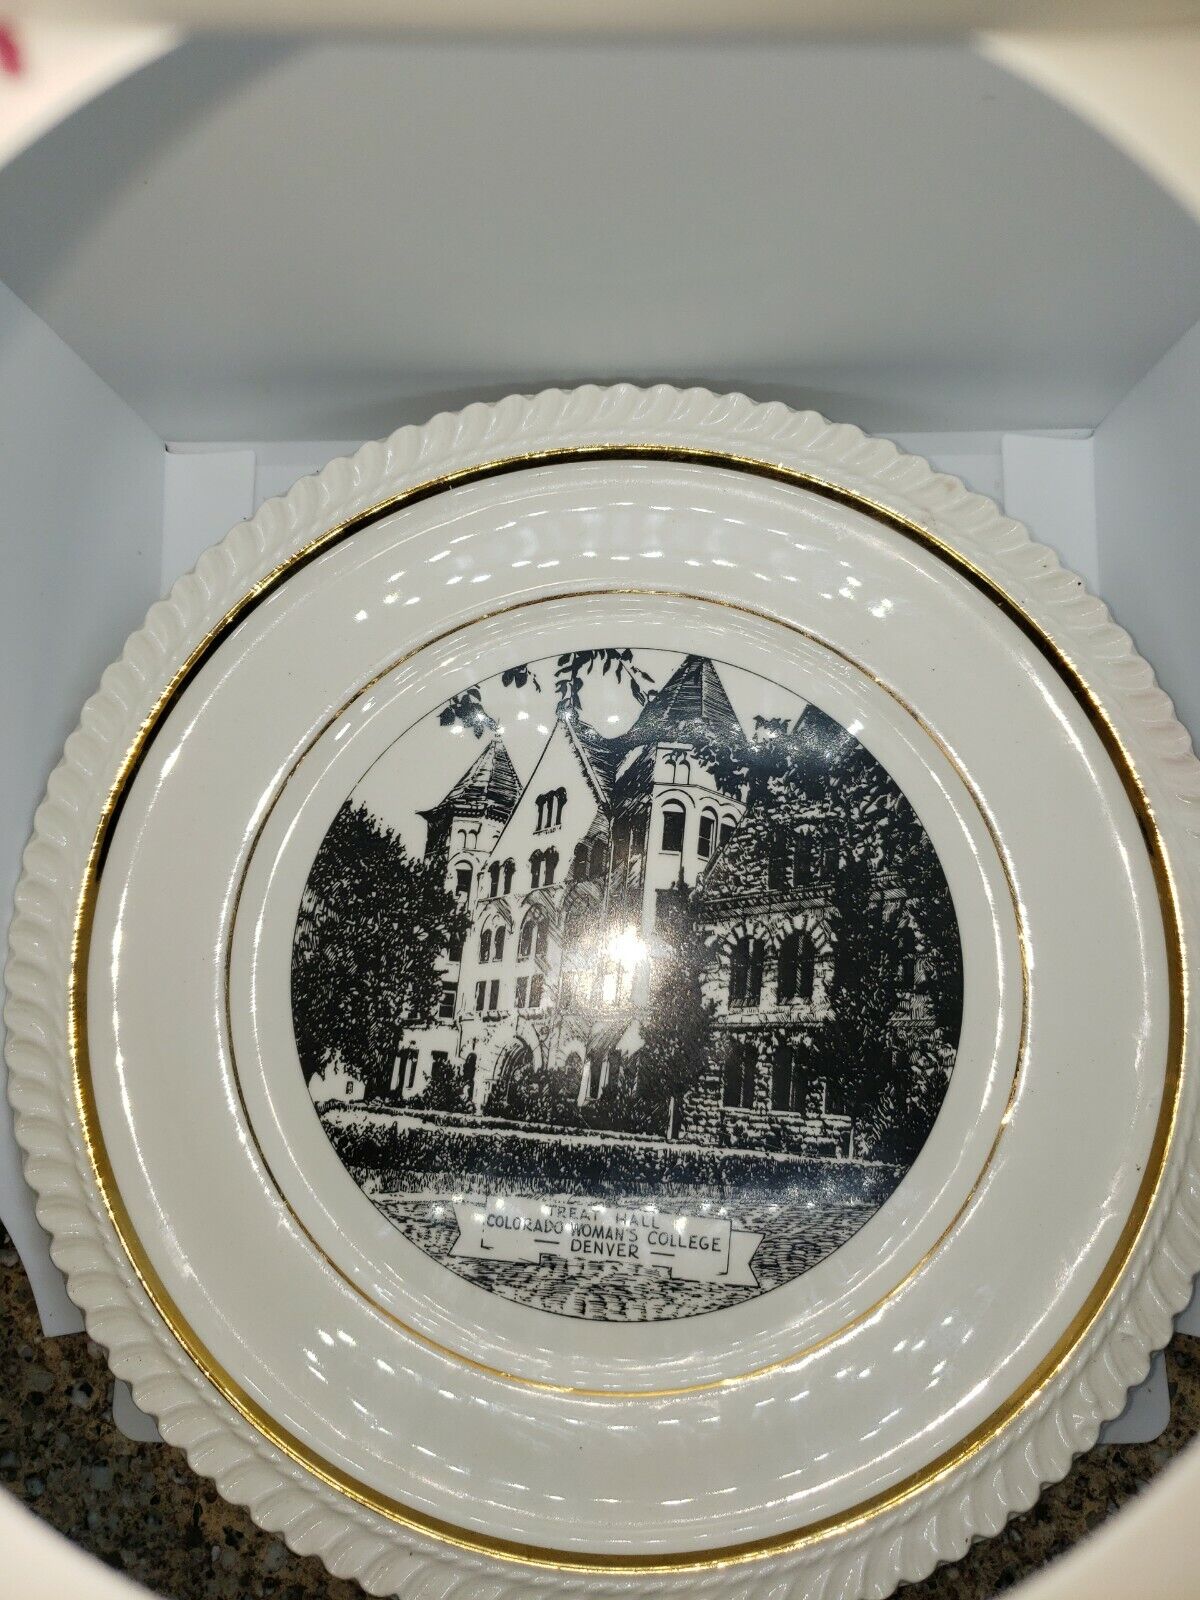  Vintage W.c. Bunting Souvenir Plate TREAT HALL COLORADO WOMAN'S COLLEGE DENVER.